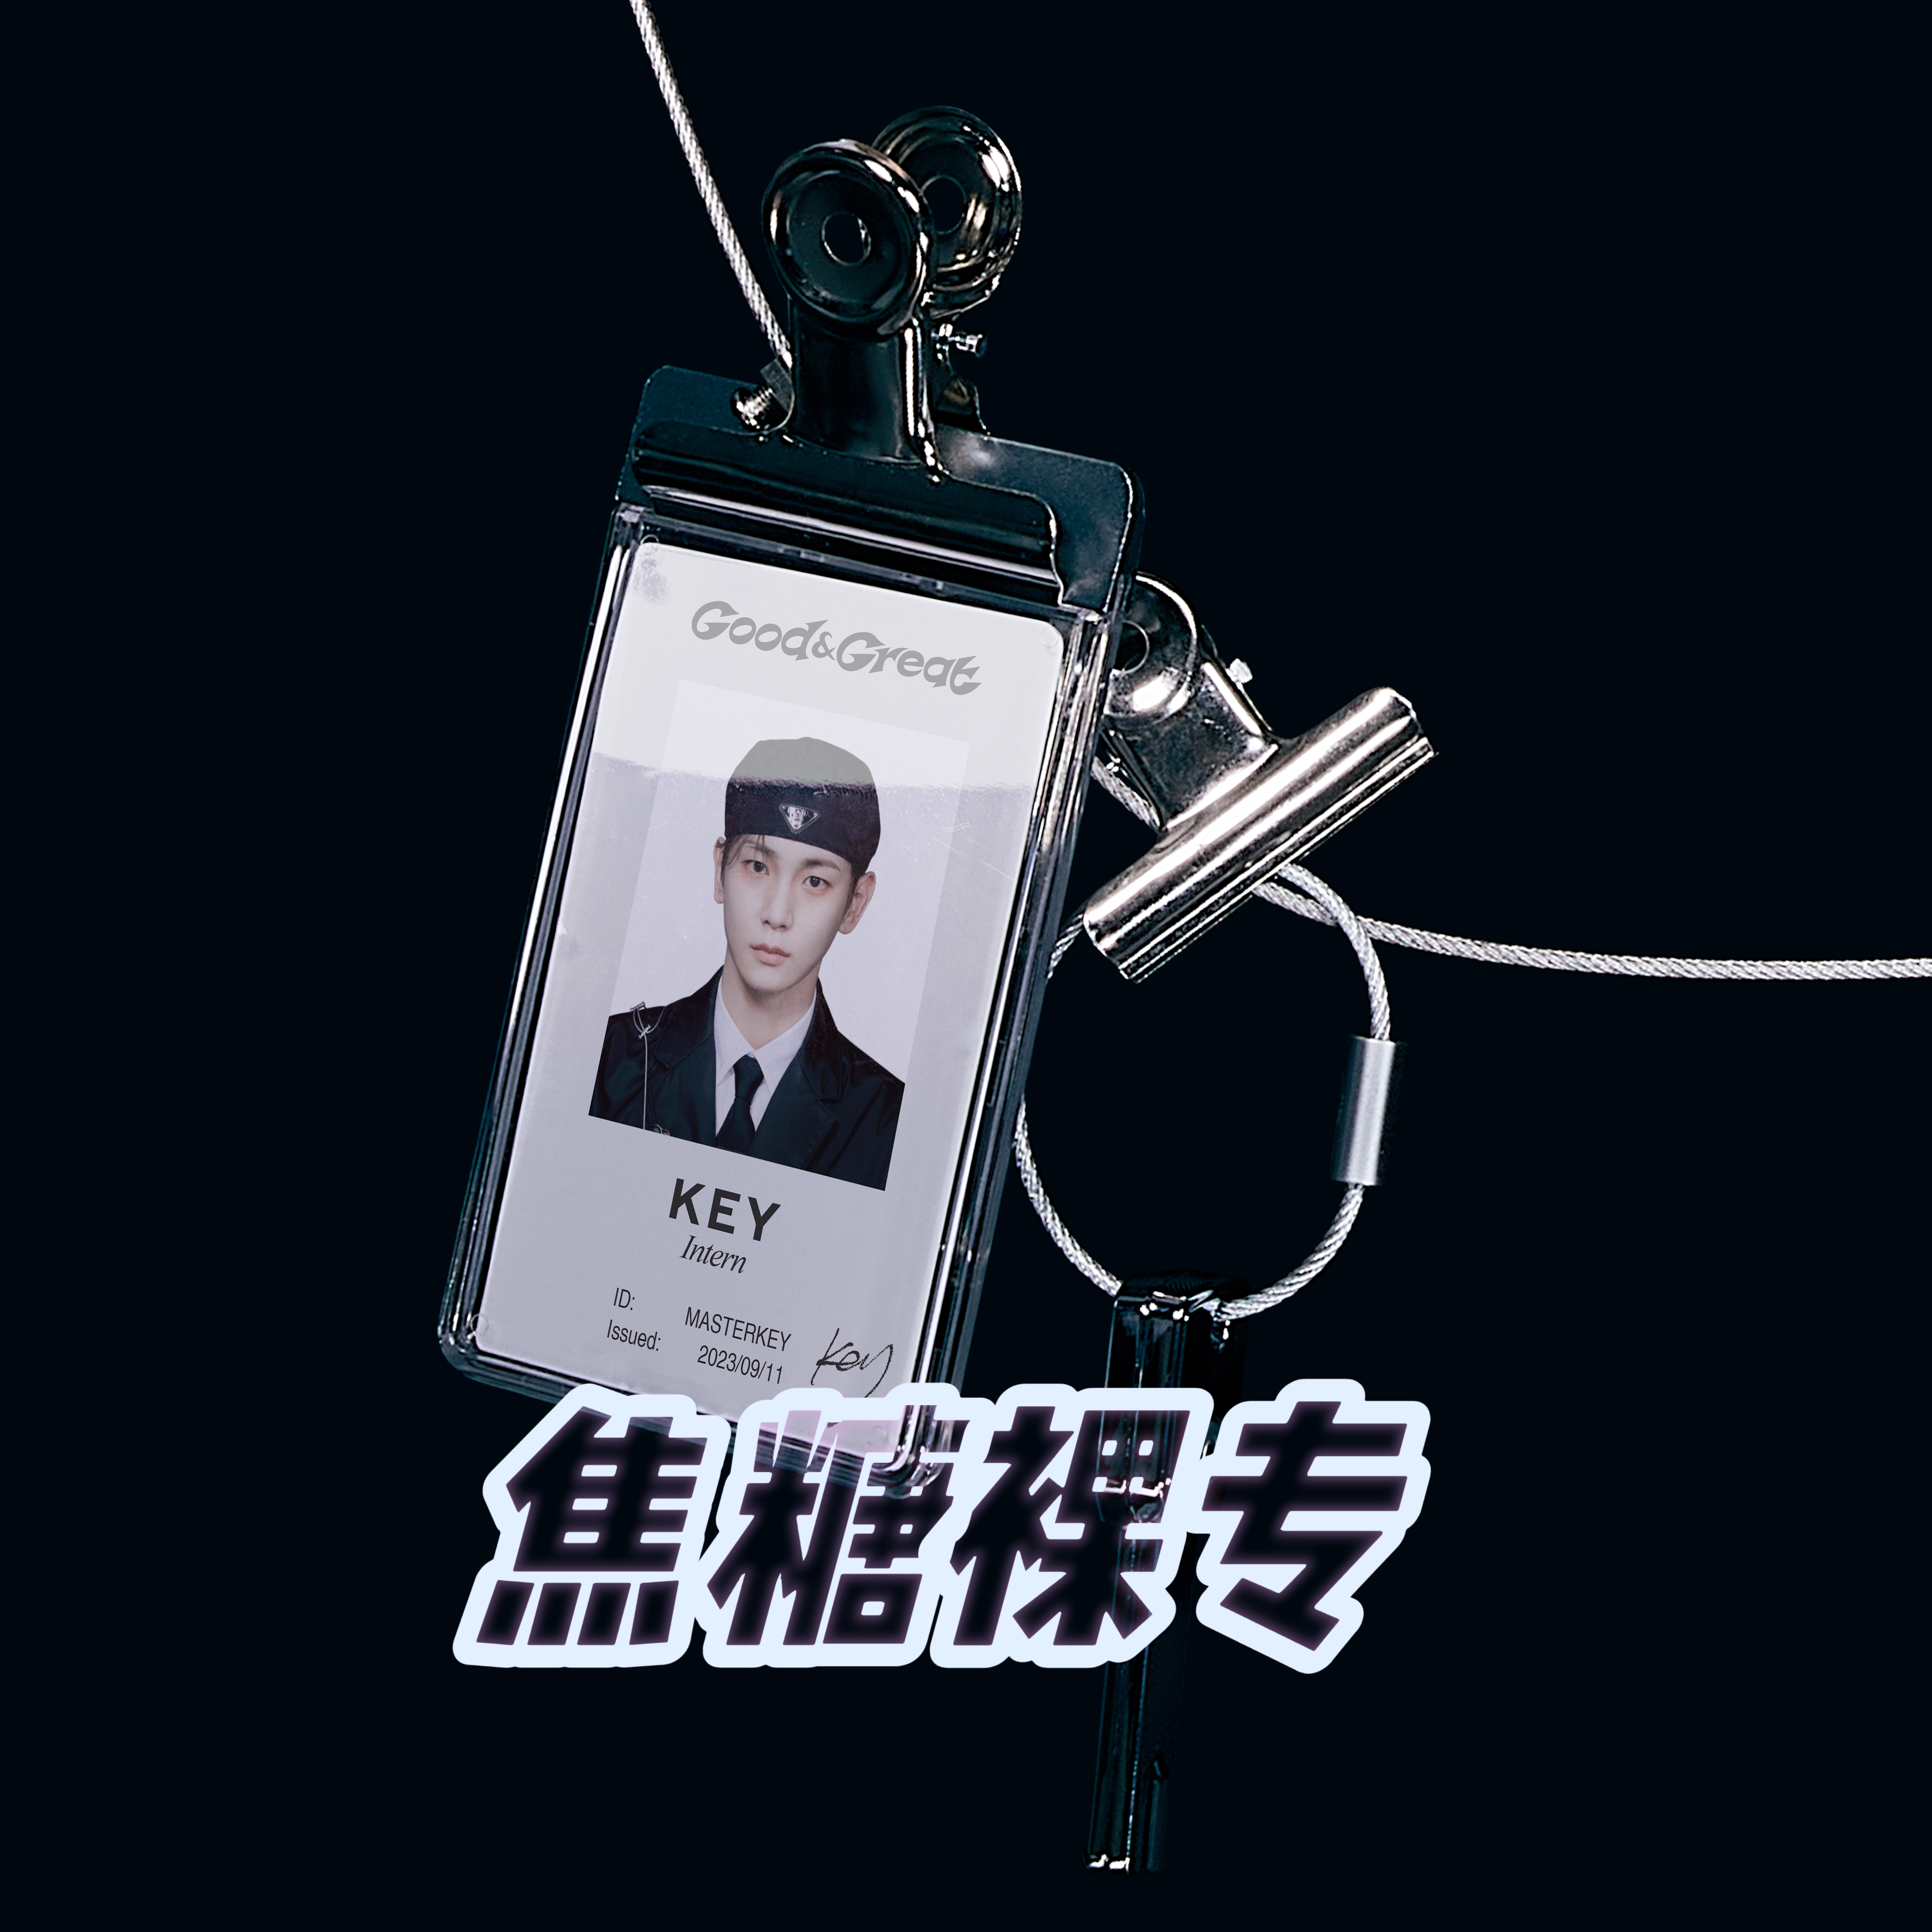 [全款 裸专] Key - 迷你2辑 [Good & Great] (ID Card Ver.) (Smart Album)_金起范Key焦糖Caramel